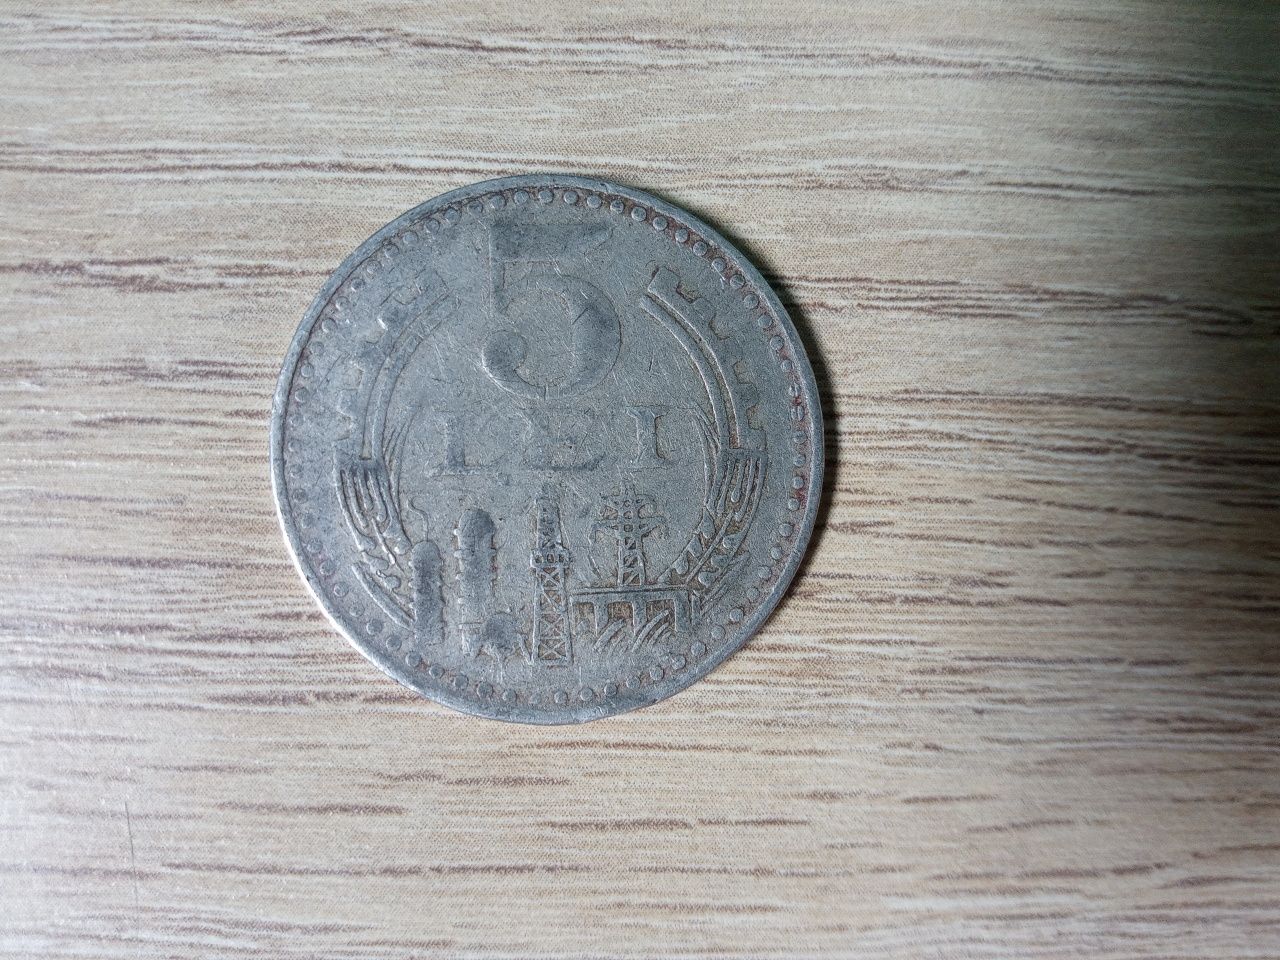 Vănd monede vechi detalii în descriere